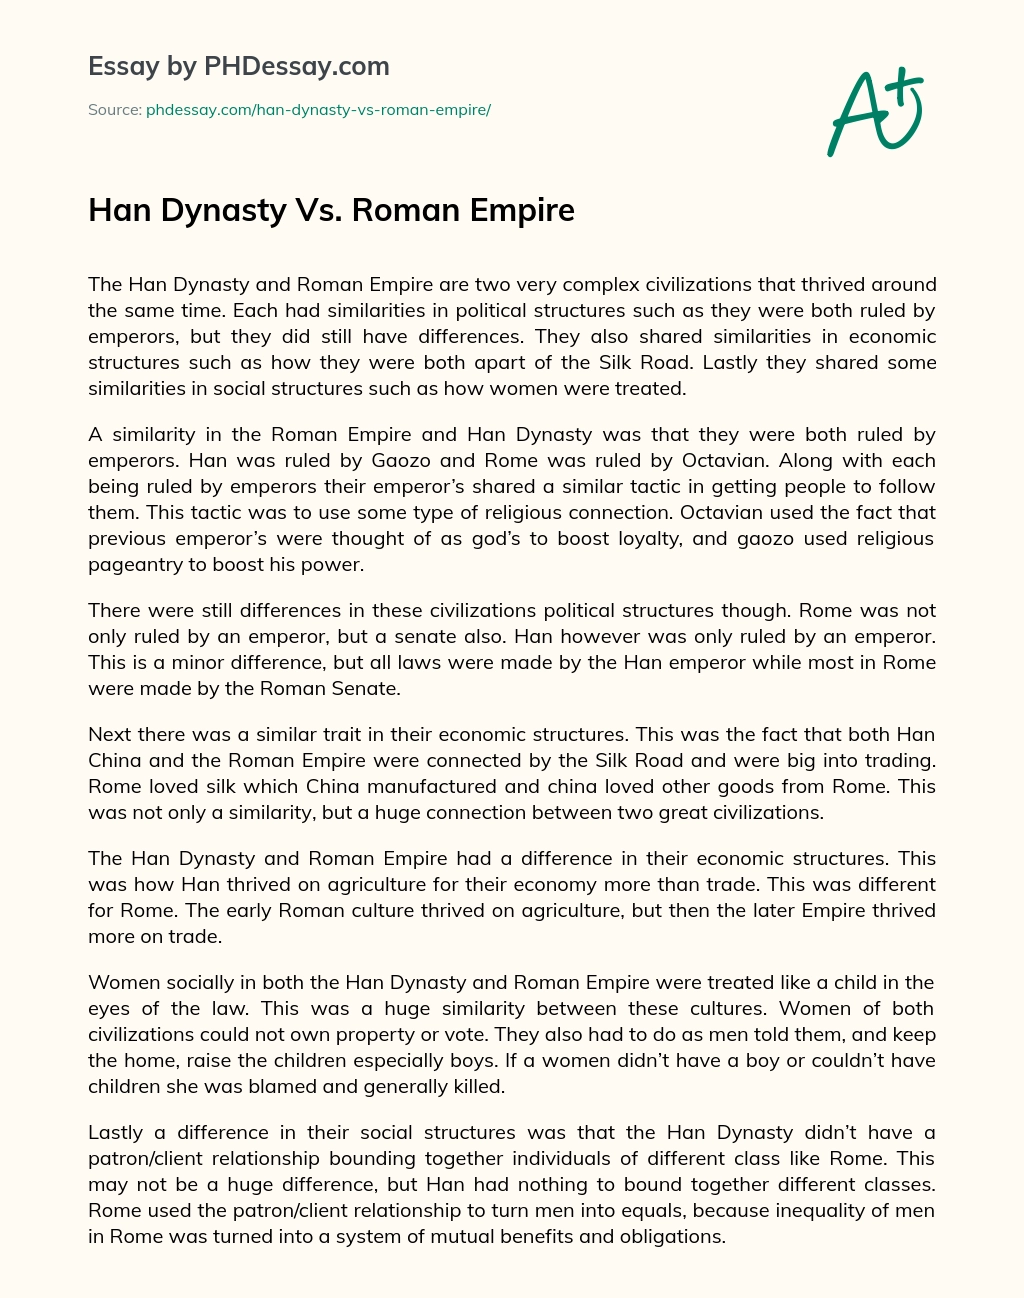 Han Dynasty Vs. Roman Empire essay